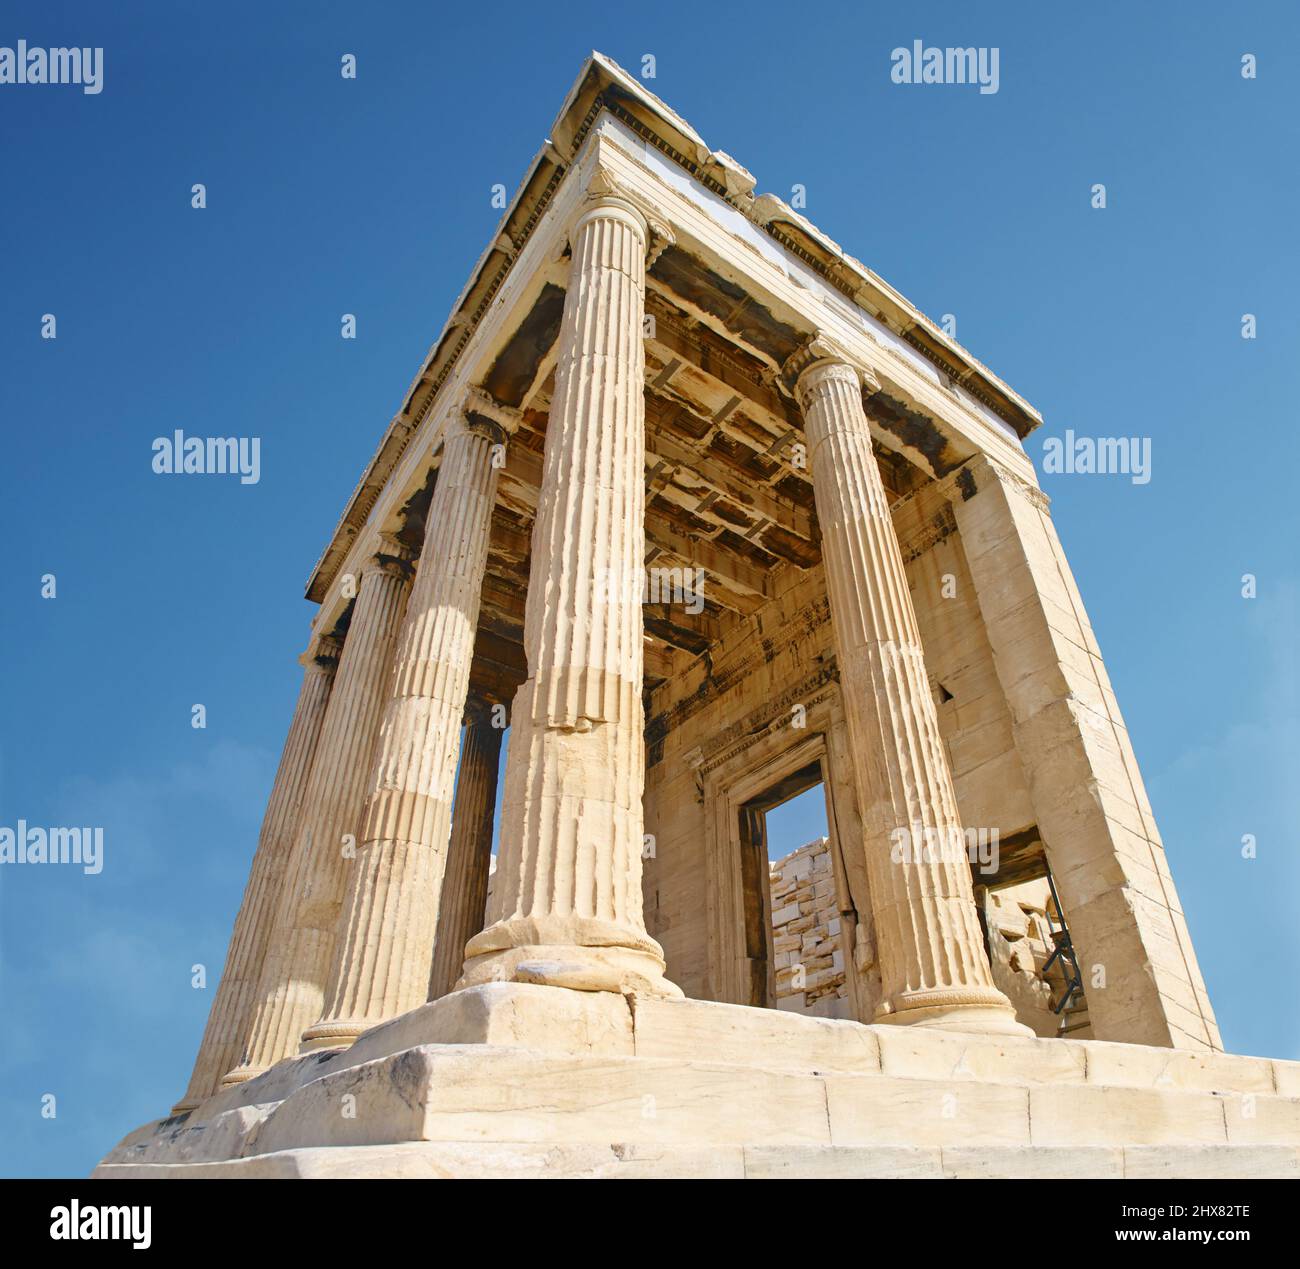 FOTOCAMERA DIGITALE OLYMPUS. Pilastri giganti in Acropoli, Grecia. Foto Stock